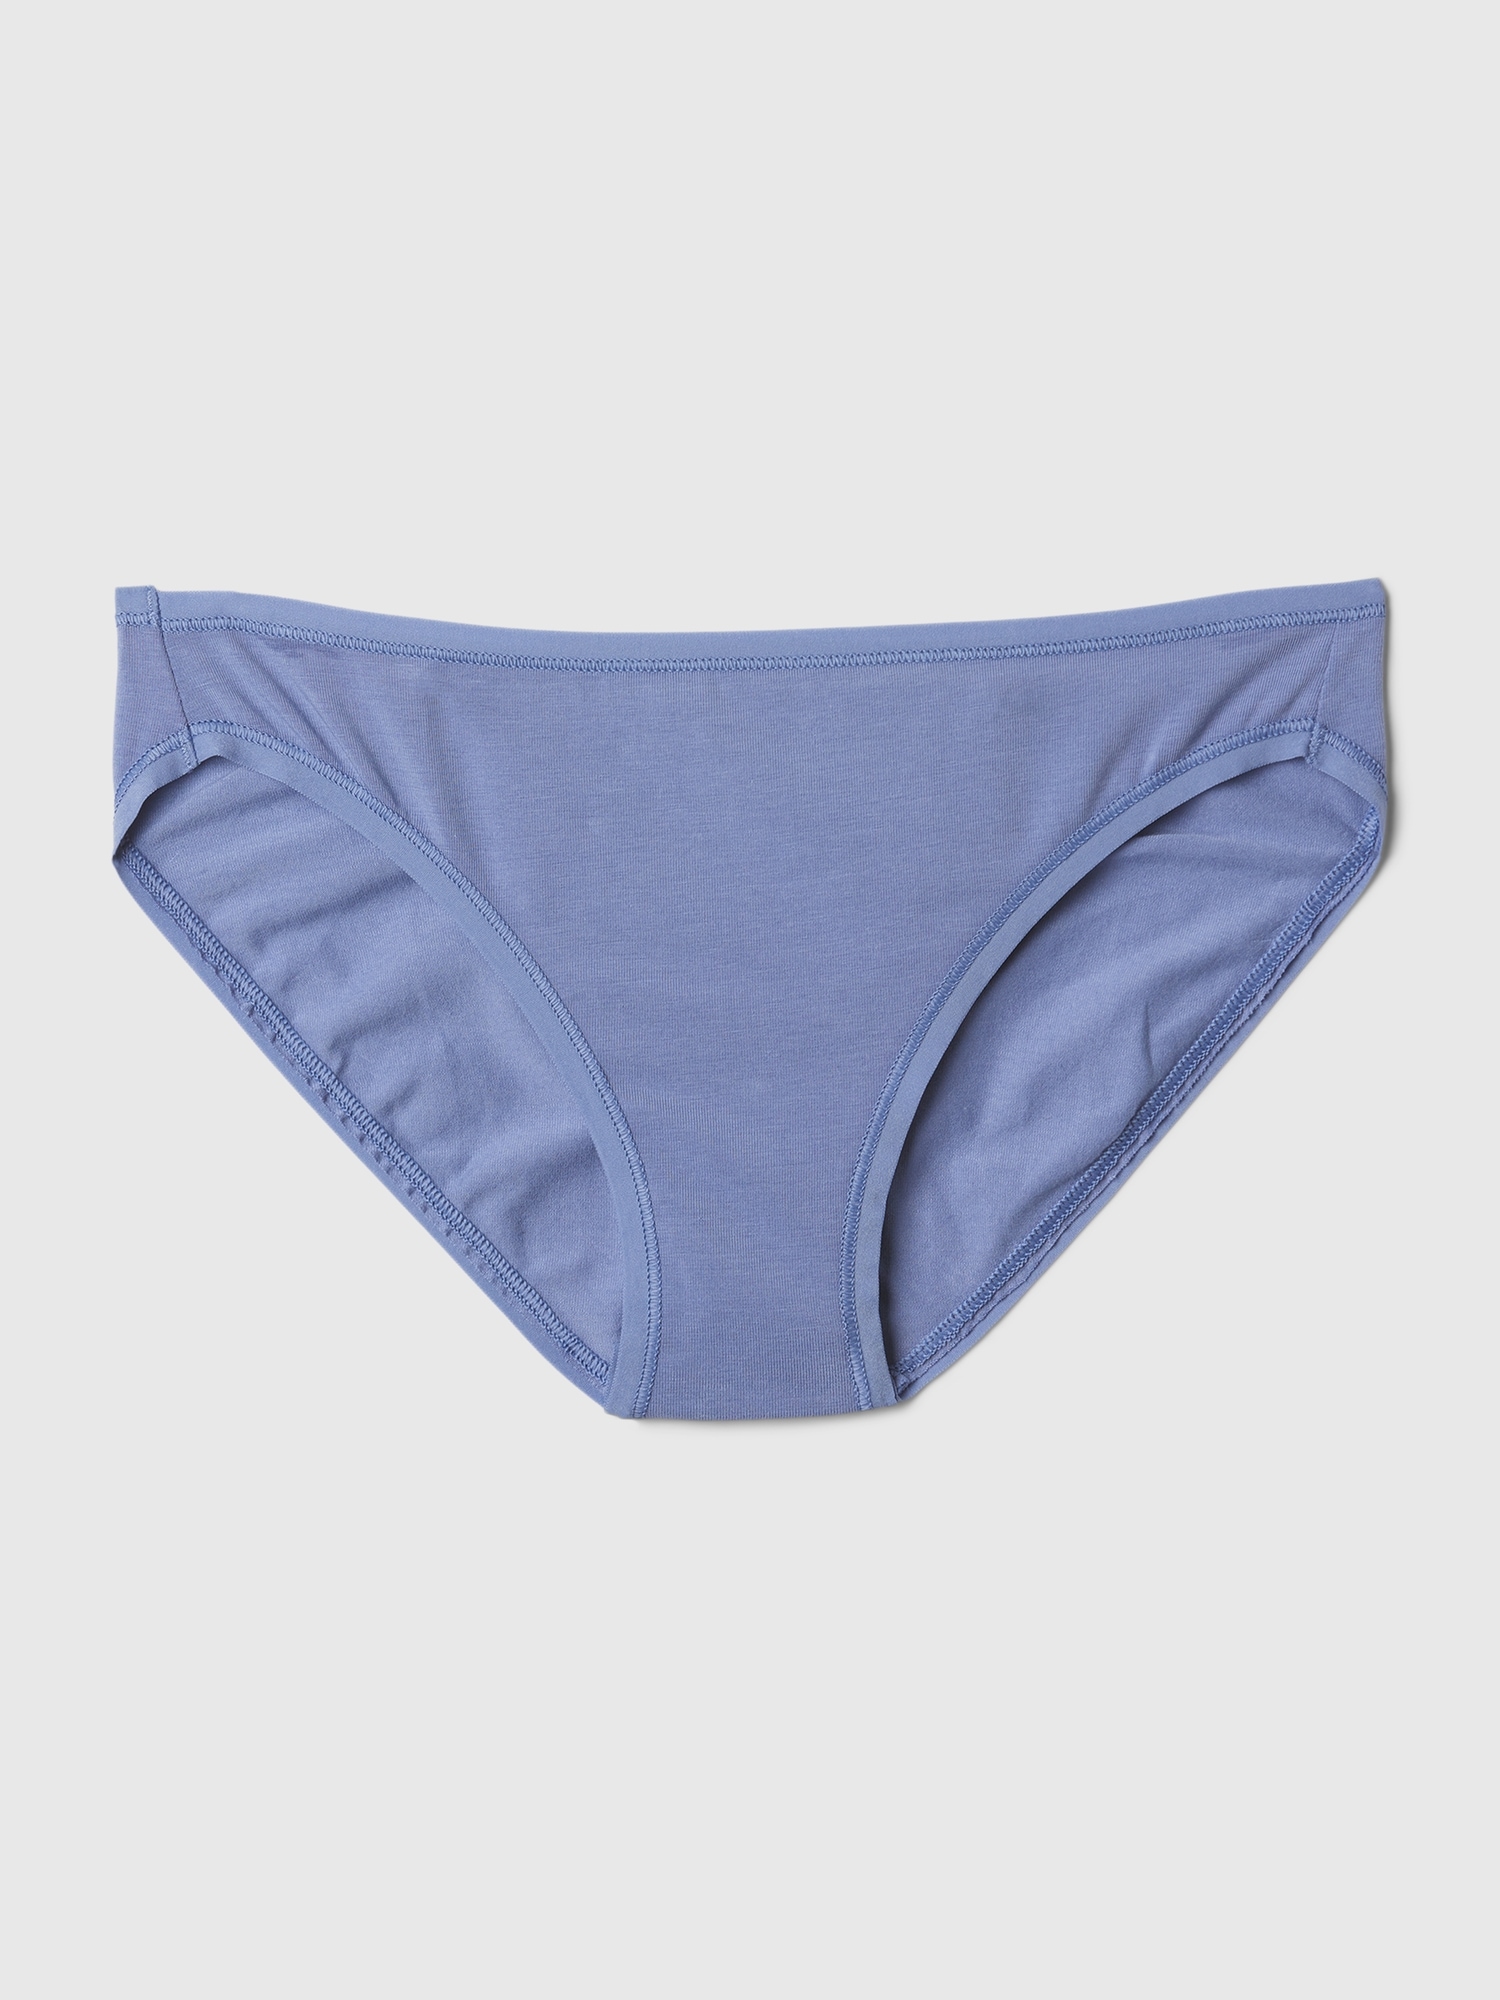 Aayomet Bikini Underwear for Women Breathable Small Fresh Cotton Trackless  Girls' New Comfortable Women's Underwear,Pink 6XL 